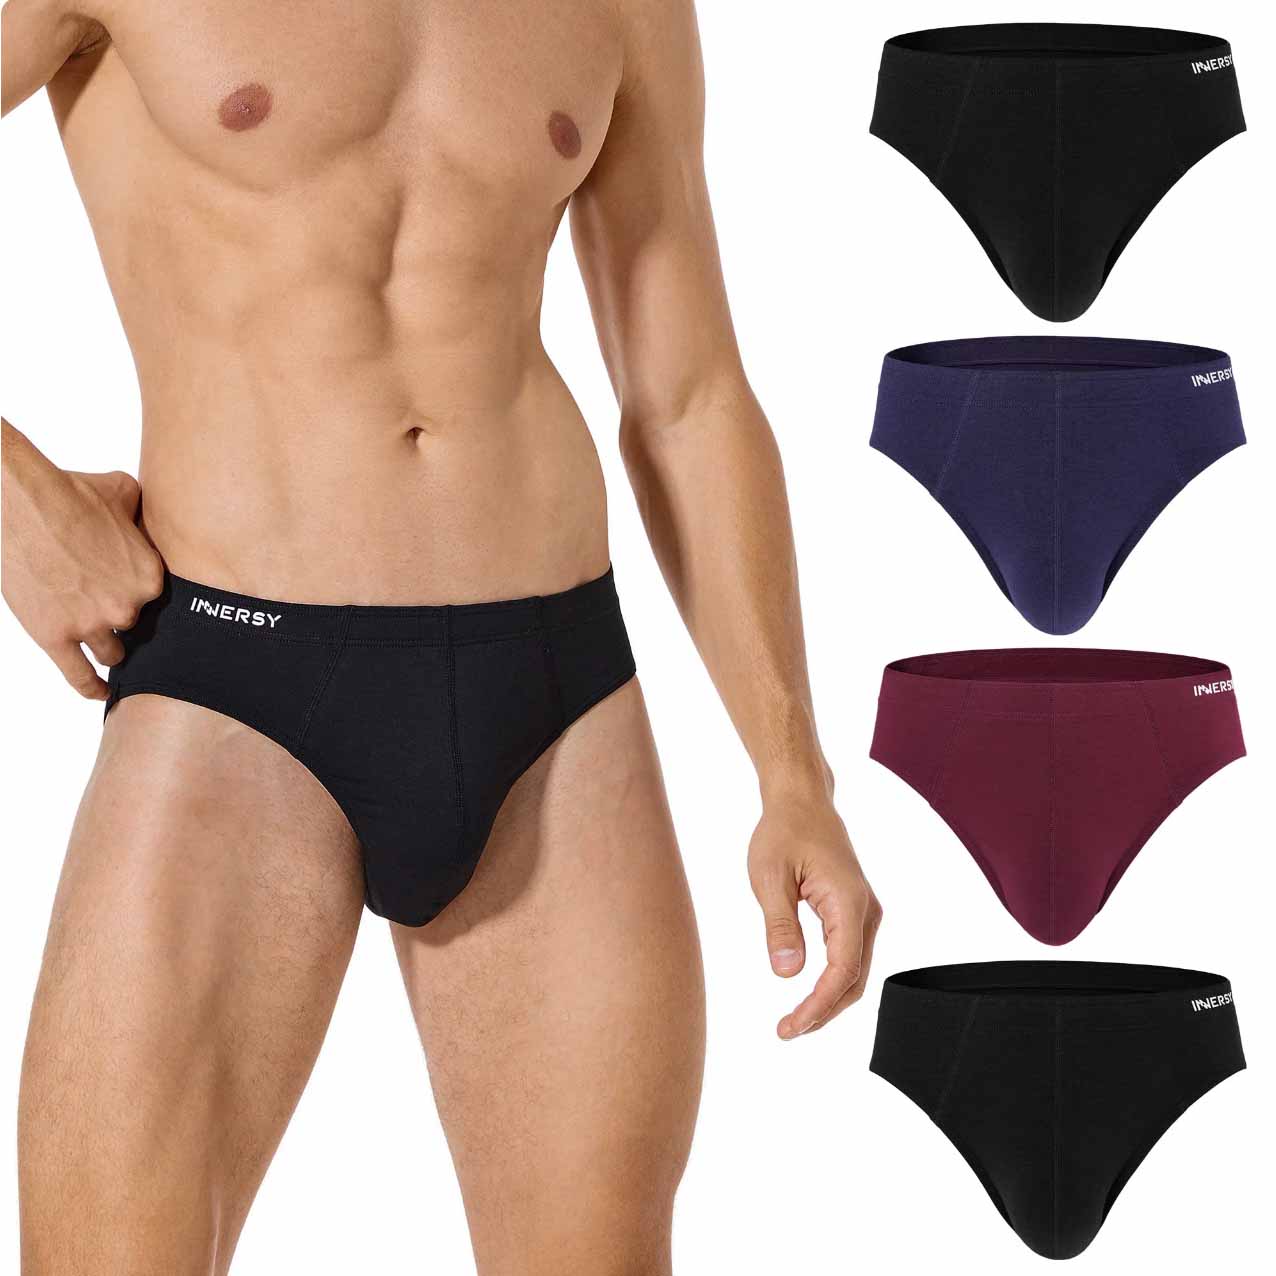 Men wearing underwear and display of INNERSY underwear in 4 colors